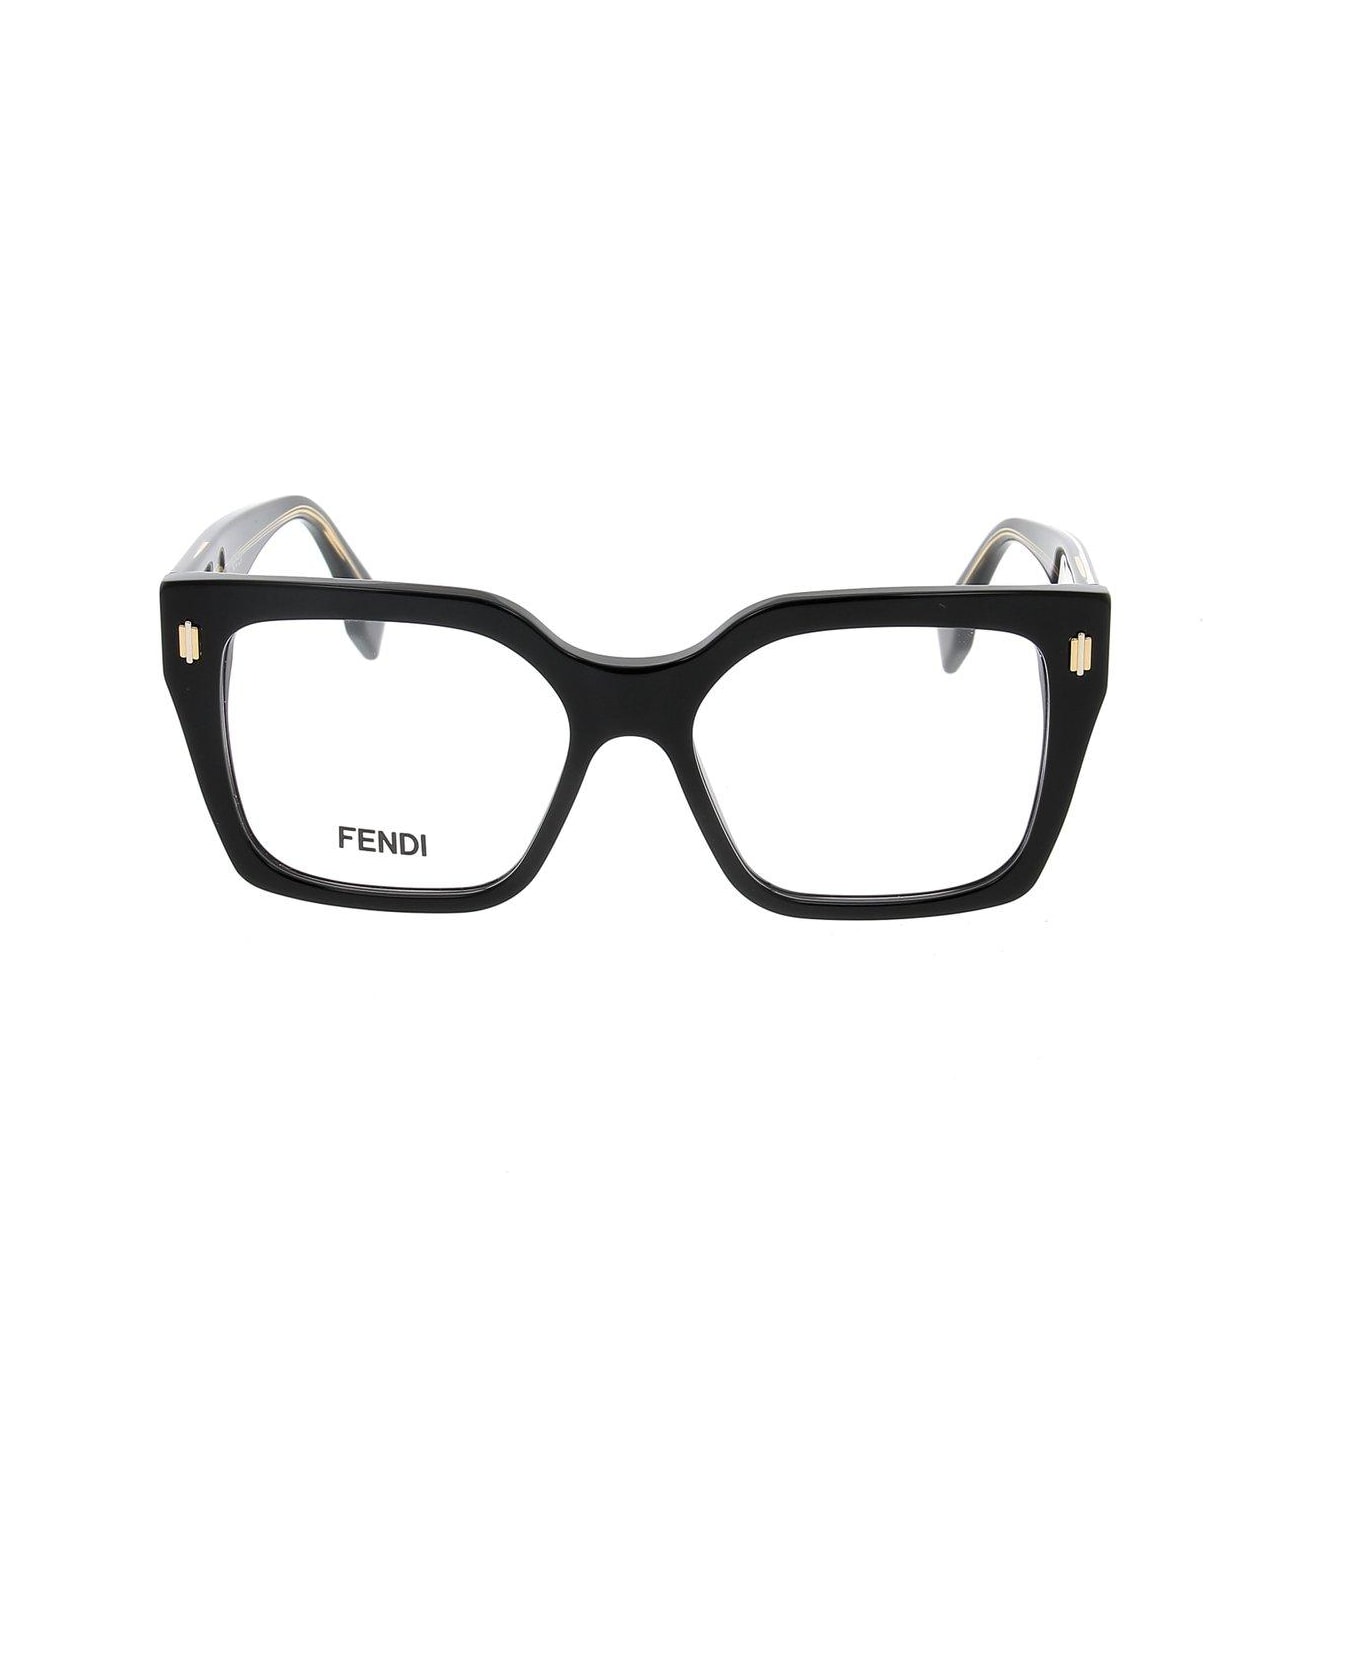 Fendi Eyewear Square Frame Glasses - 001